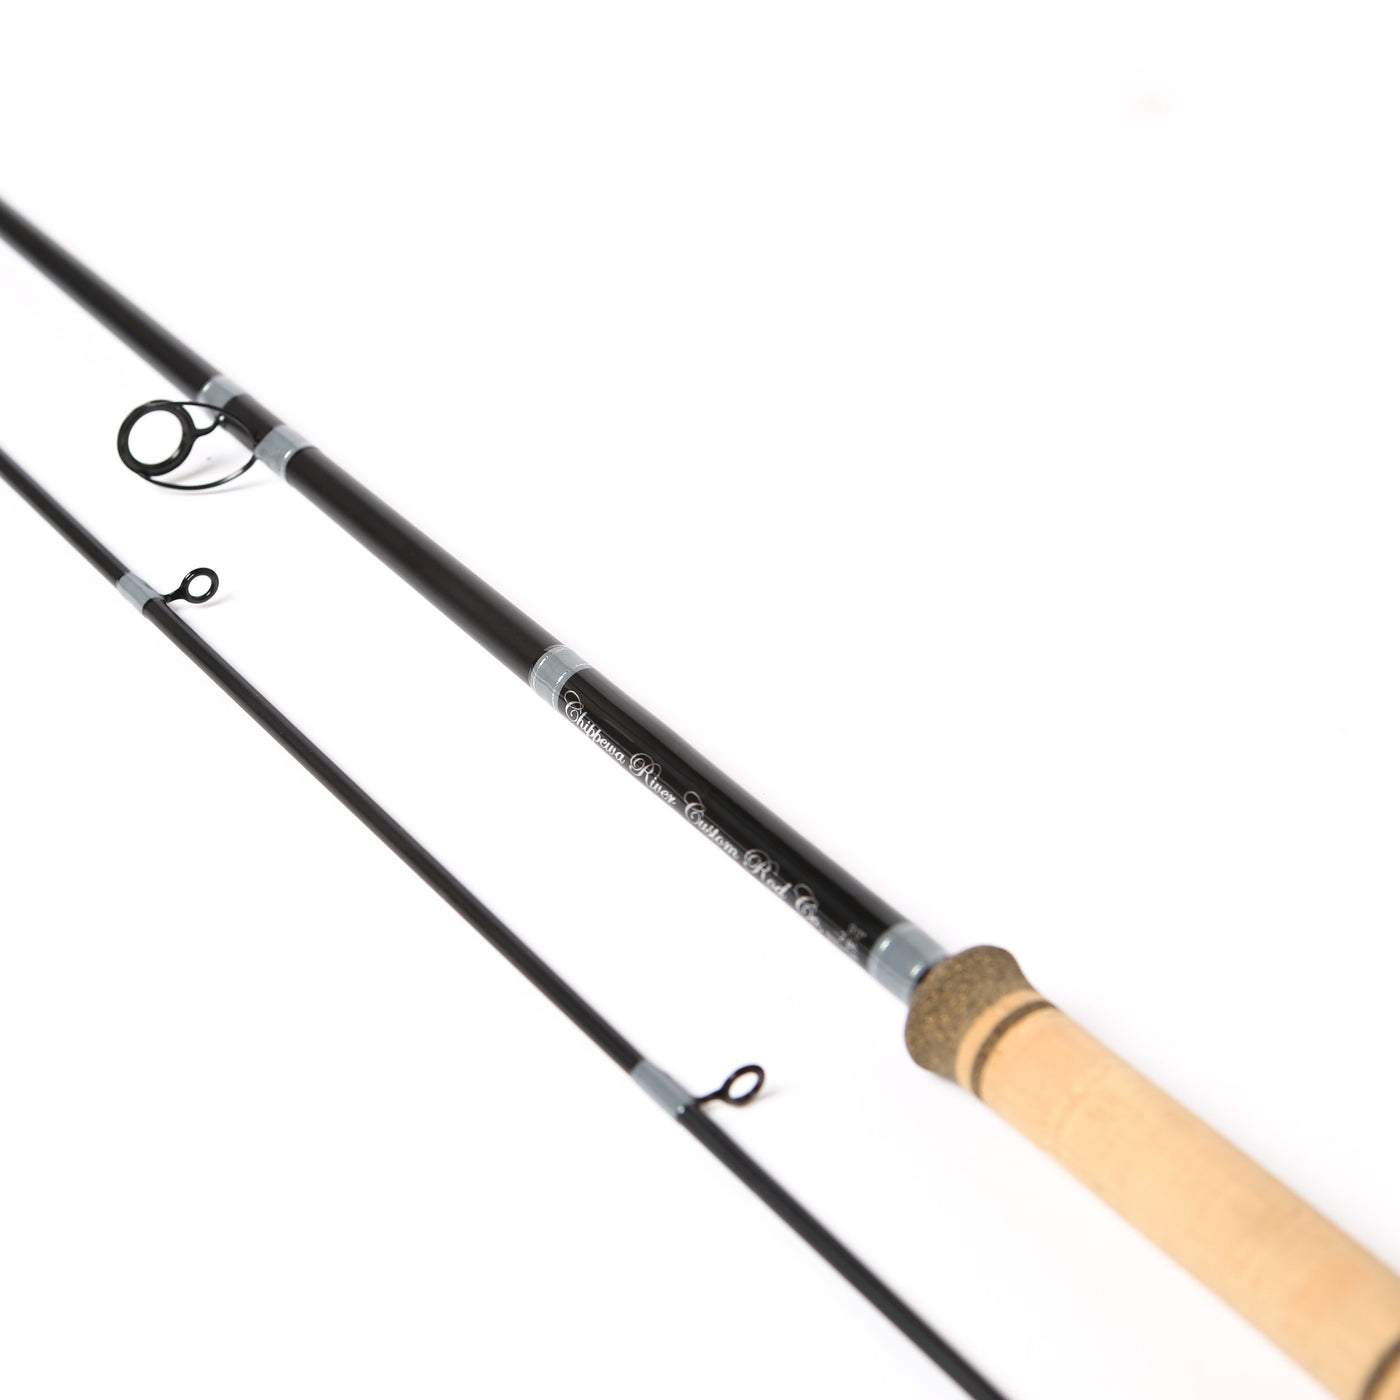 Chippewa River Custom Rod - Love the look of the new Unity fly rod